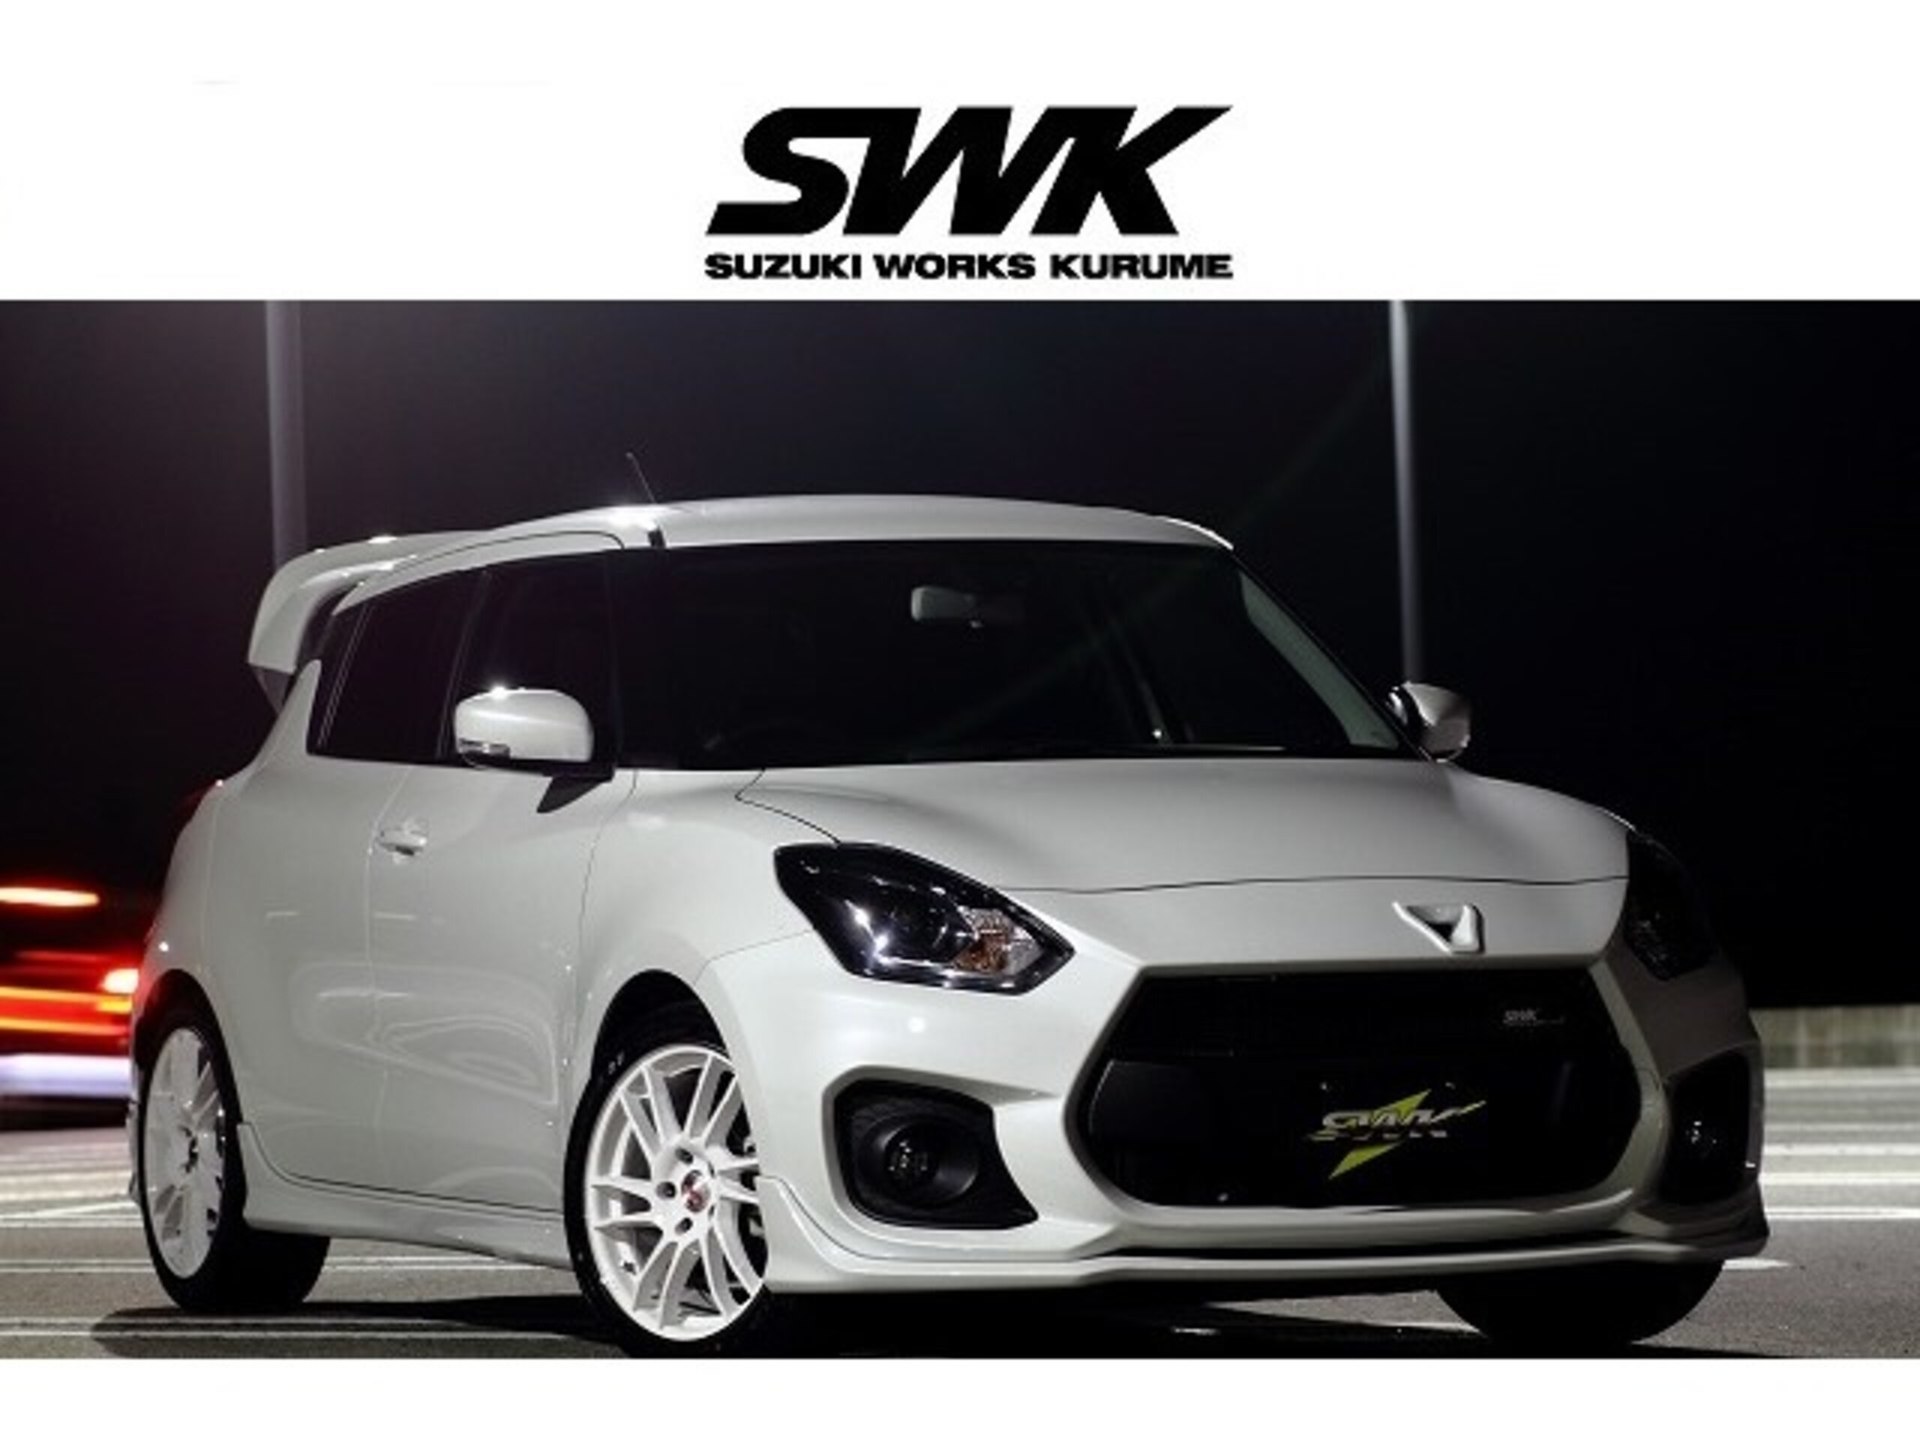 Swift Sport Suzuki Works Kurume White Edition 6mt 10km スズキ スイフトスポーツ 1 4 Swk ホワイトエディション 新車ベース ホワイトパール 車両本体価格 241 8万円 Jdm 中古車紹介 Introducing Of Jdm Used Car